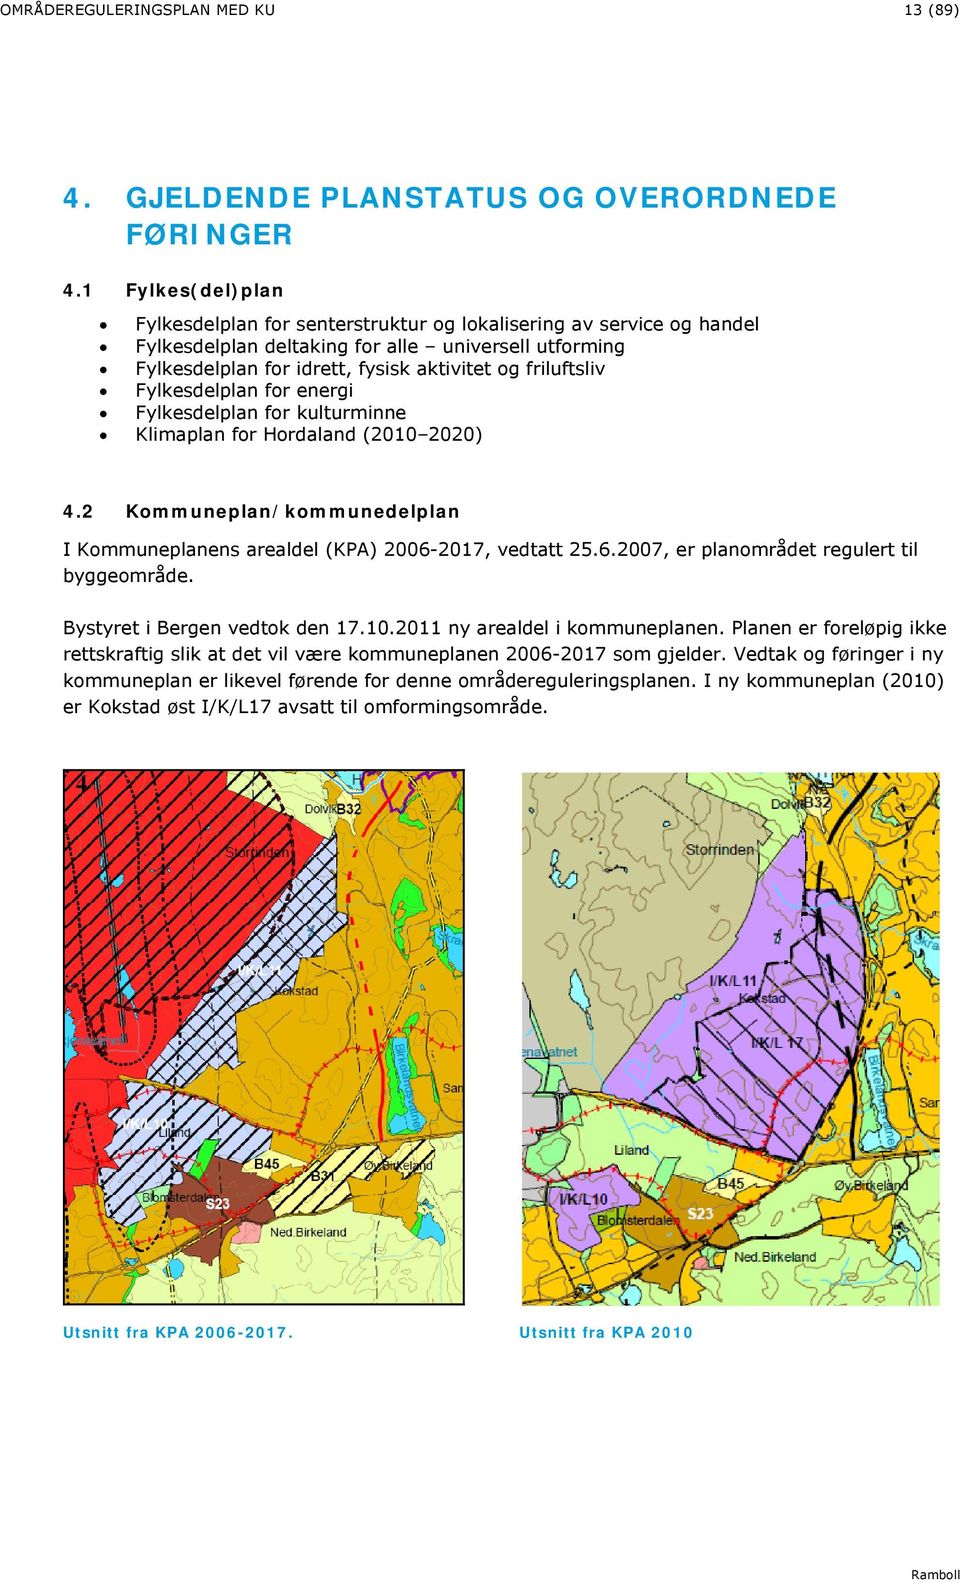 Fylkesdelplan for energi Fylkesdelplan for kulturminne Klimaplan for Hordaland (2010 2020) 4.2 Kommuneplan/kommunedelplan I Kommuneplanens arealdel (KPA) 2006-